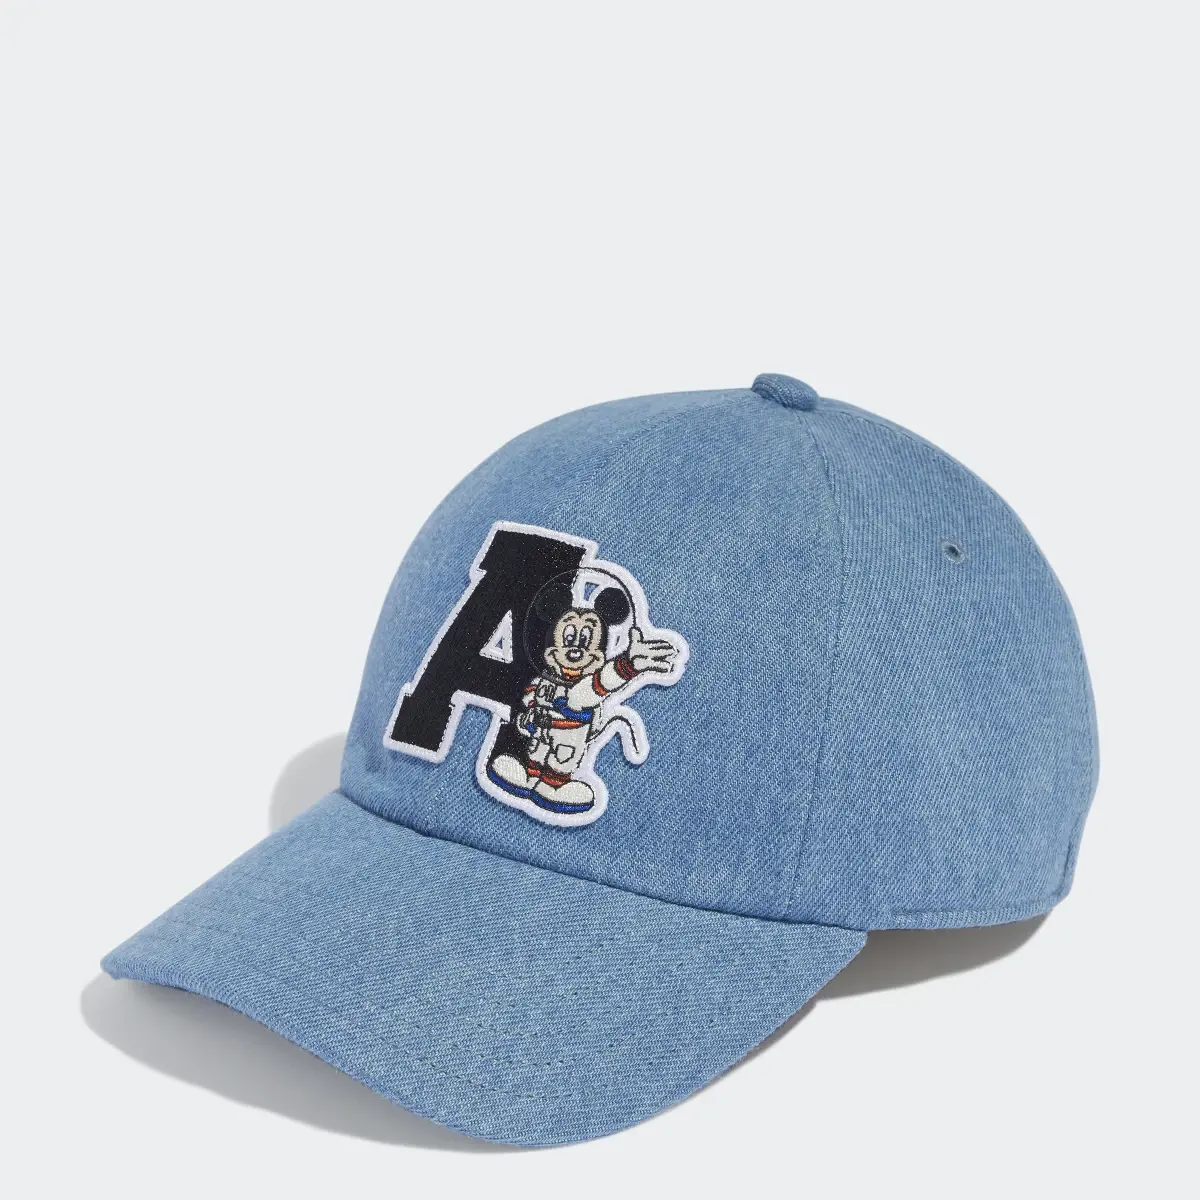 Adidas Baseball Hat. 1